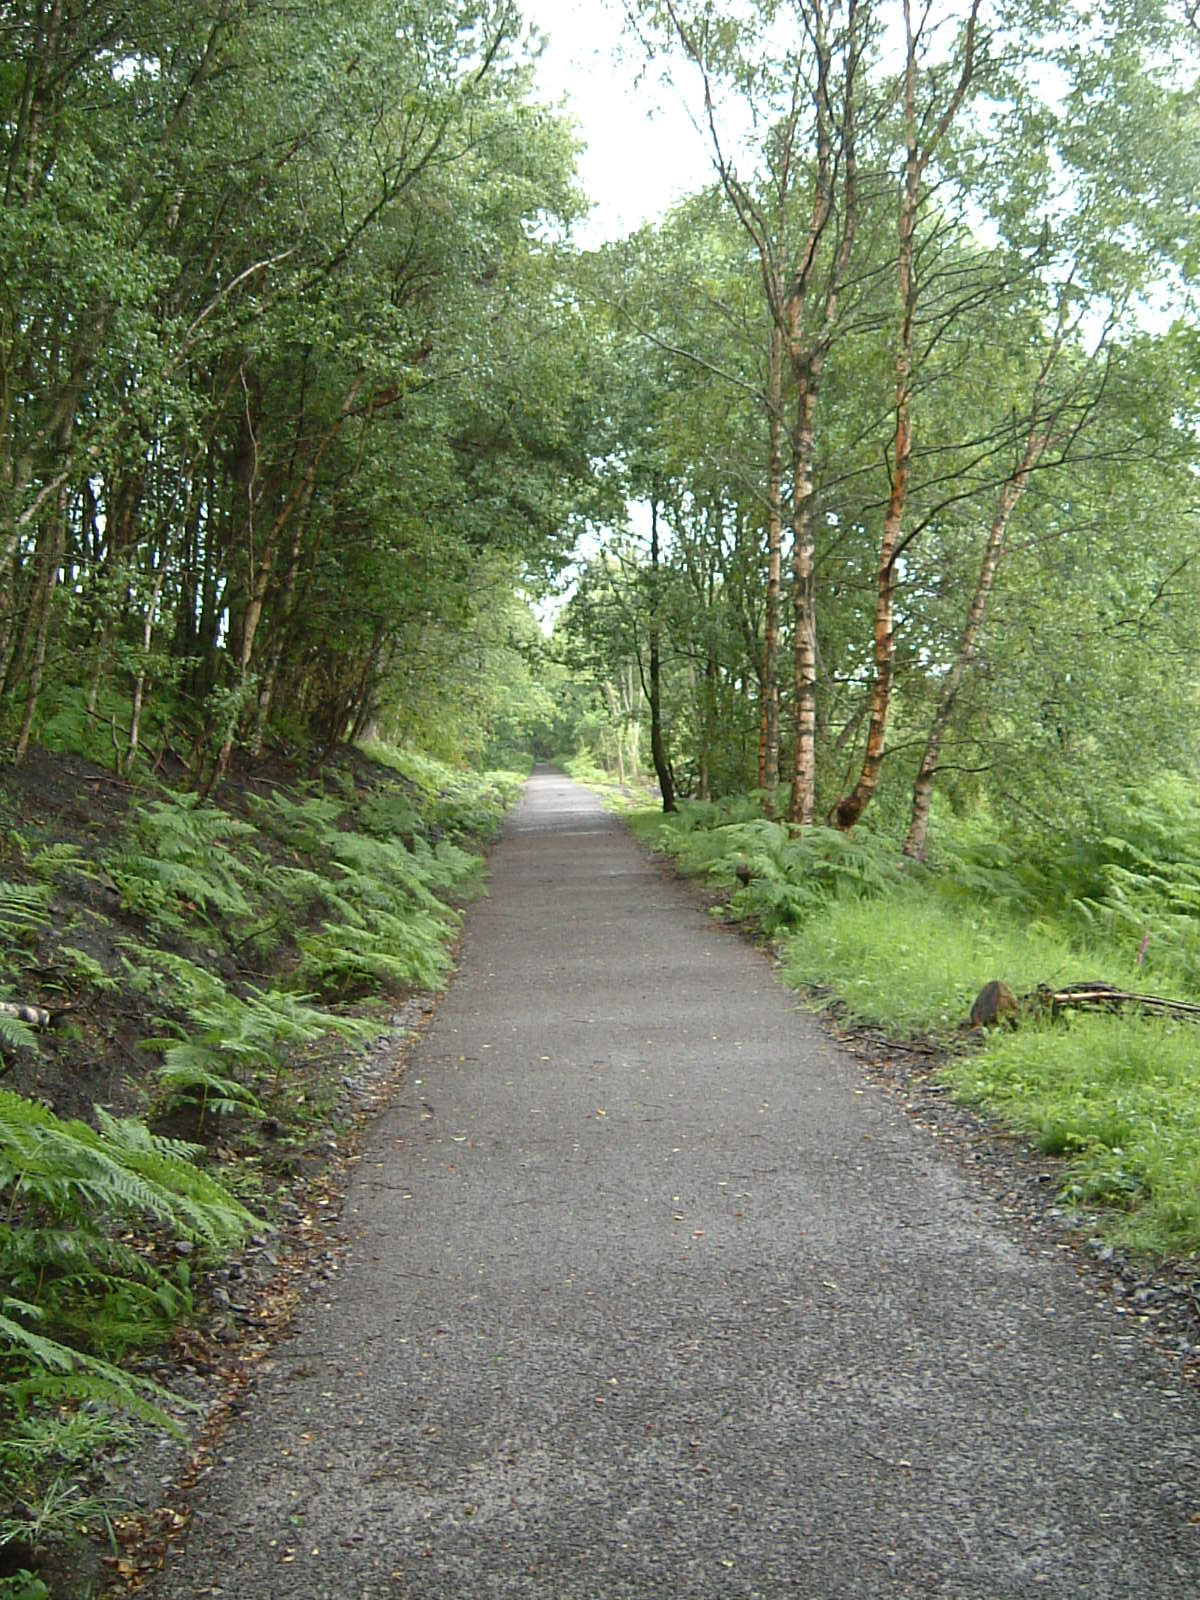 The South Tyne Trail